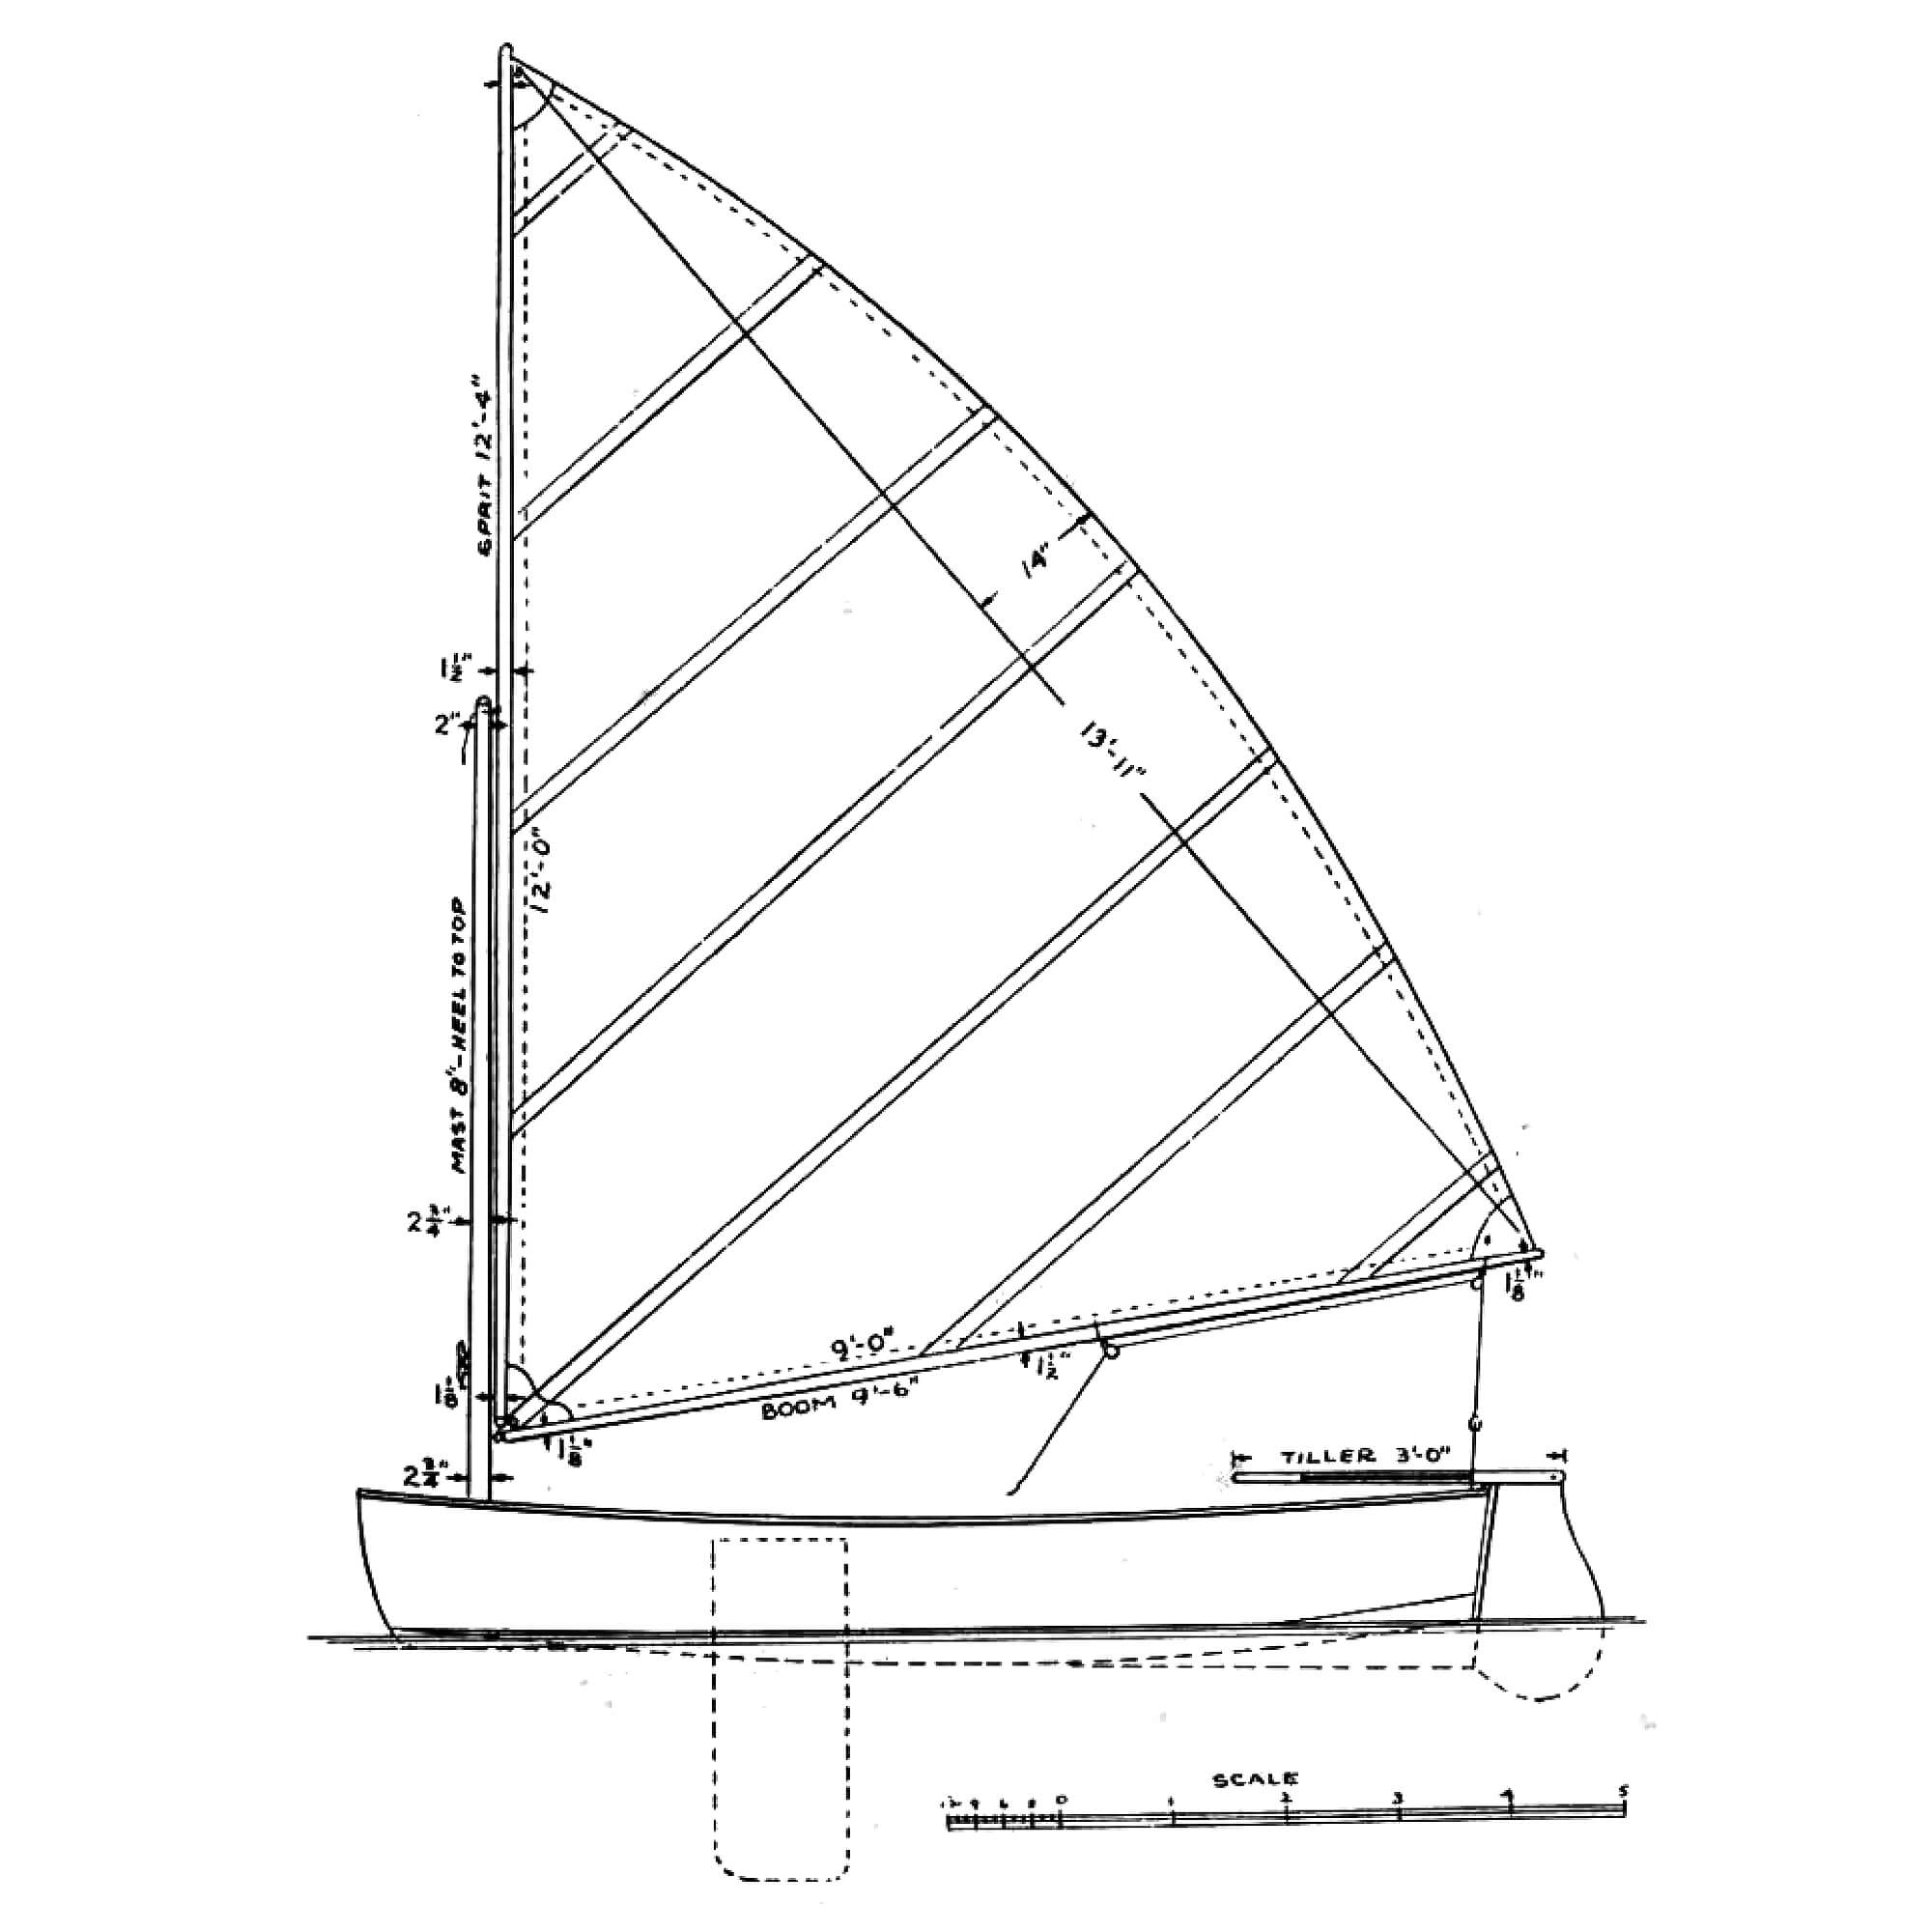 A simple little sailing skiff